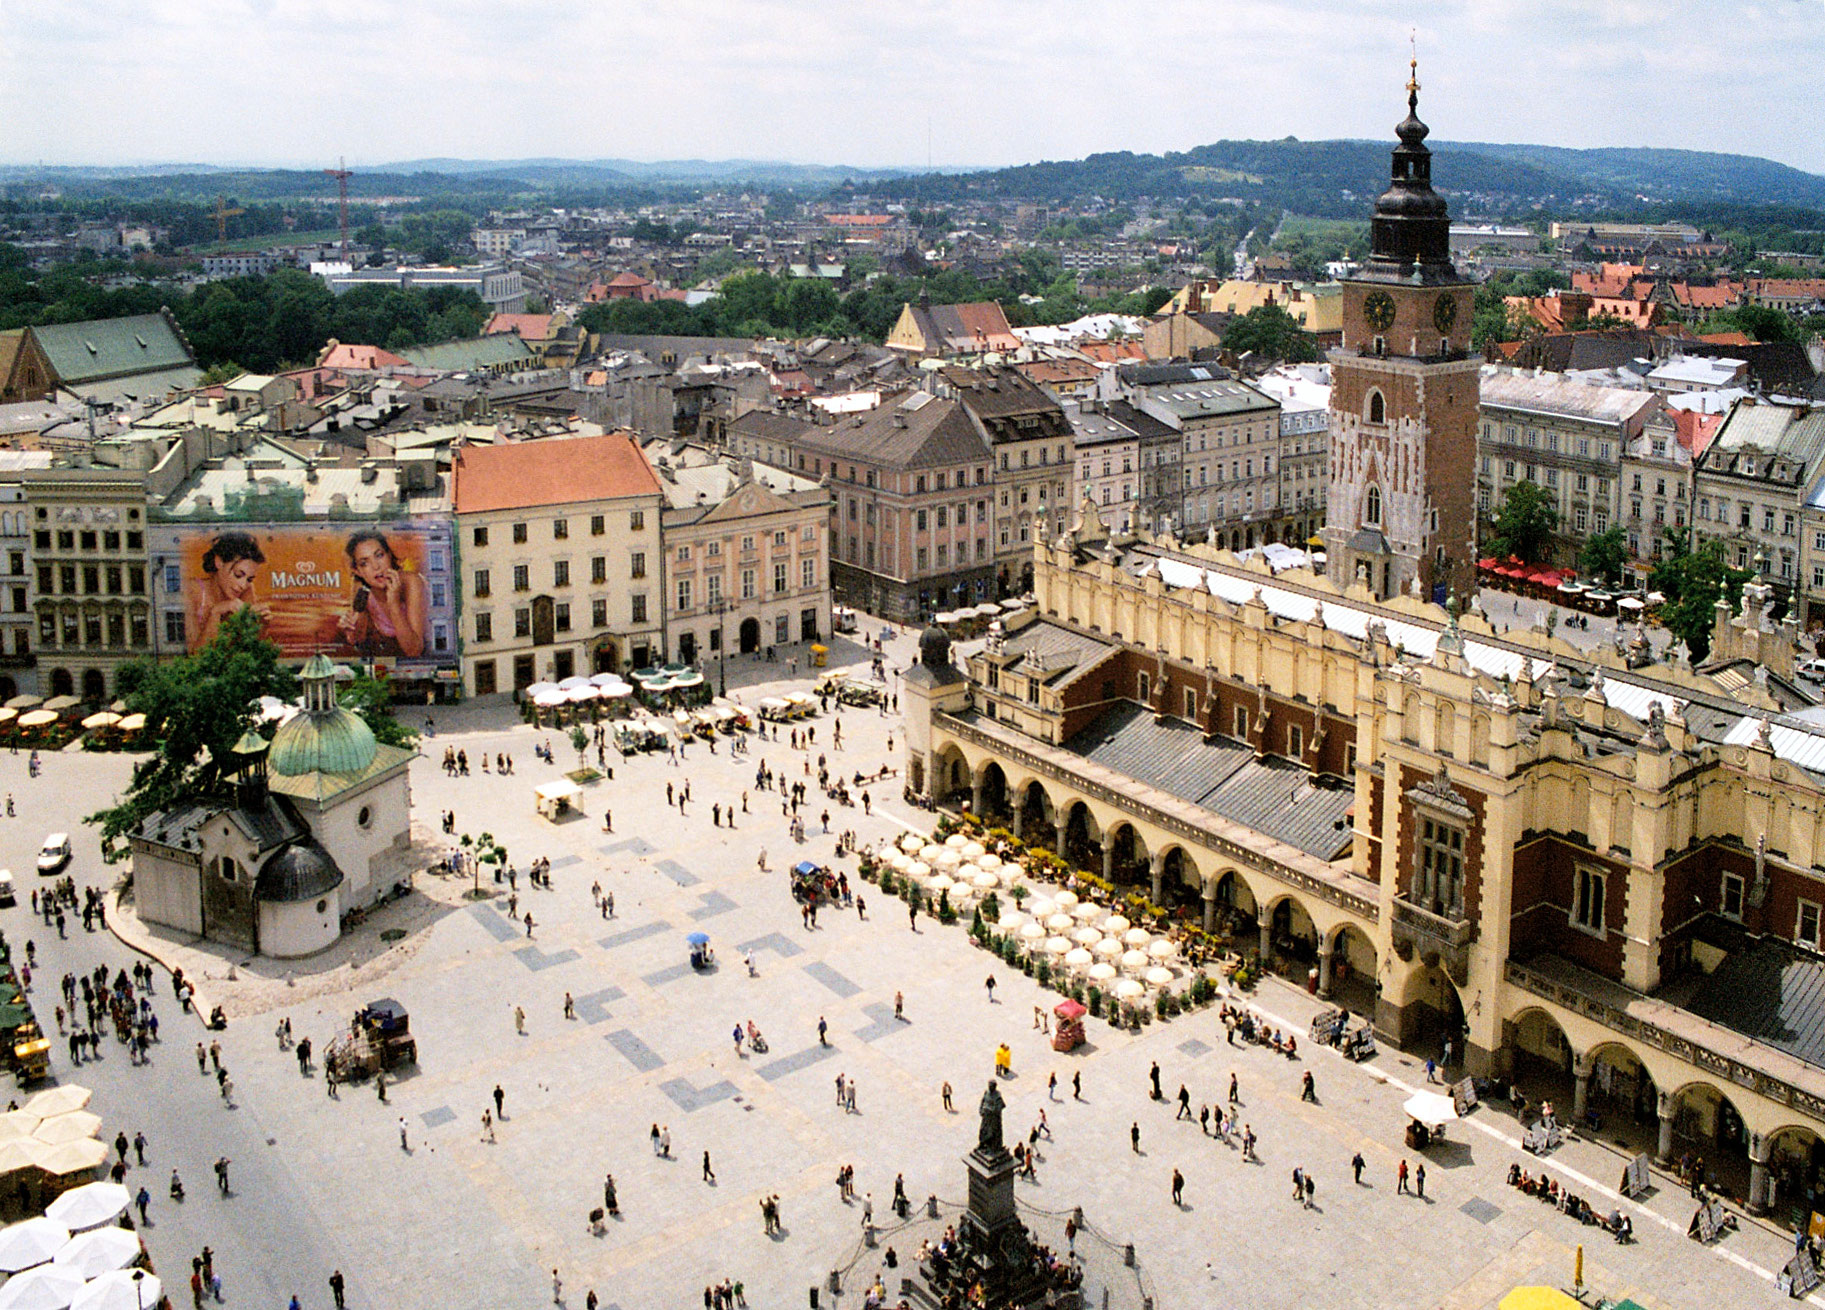 Must visit Krakow